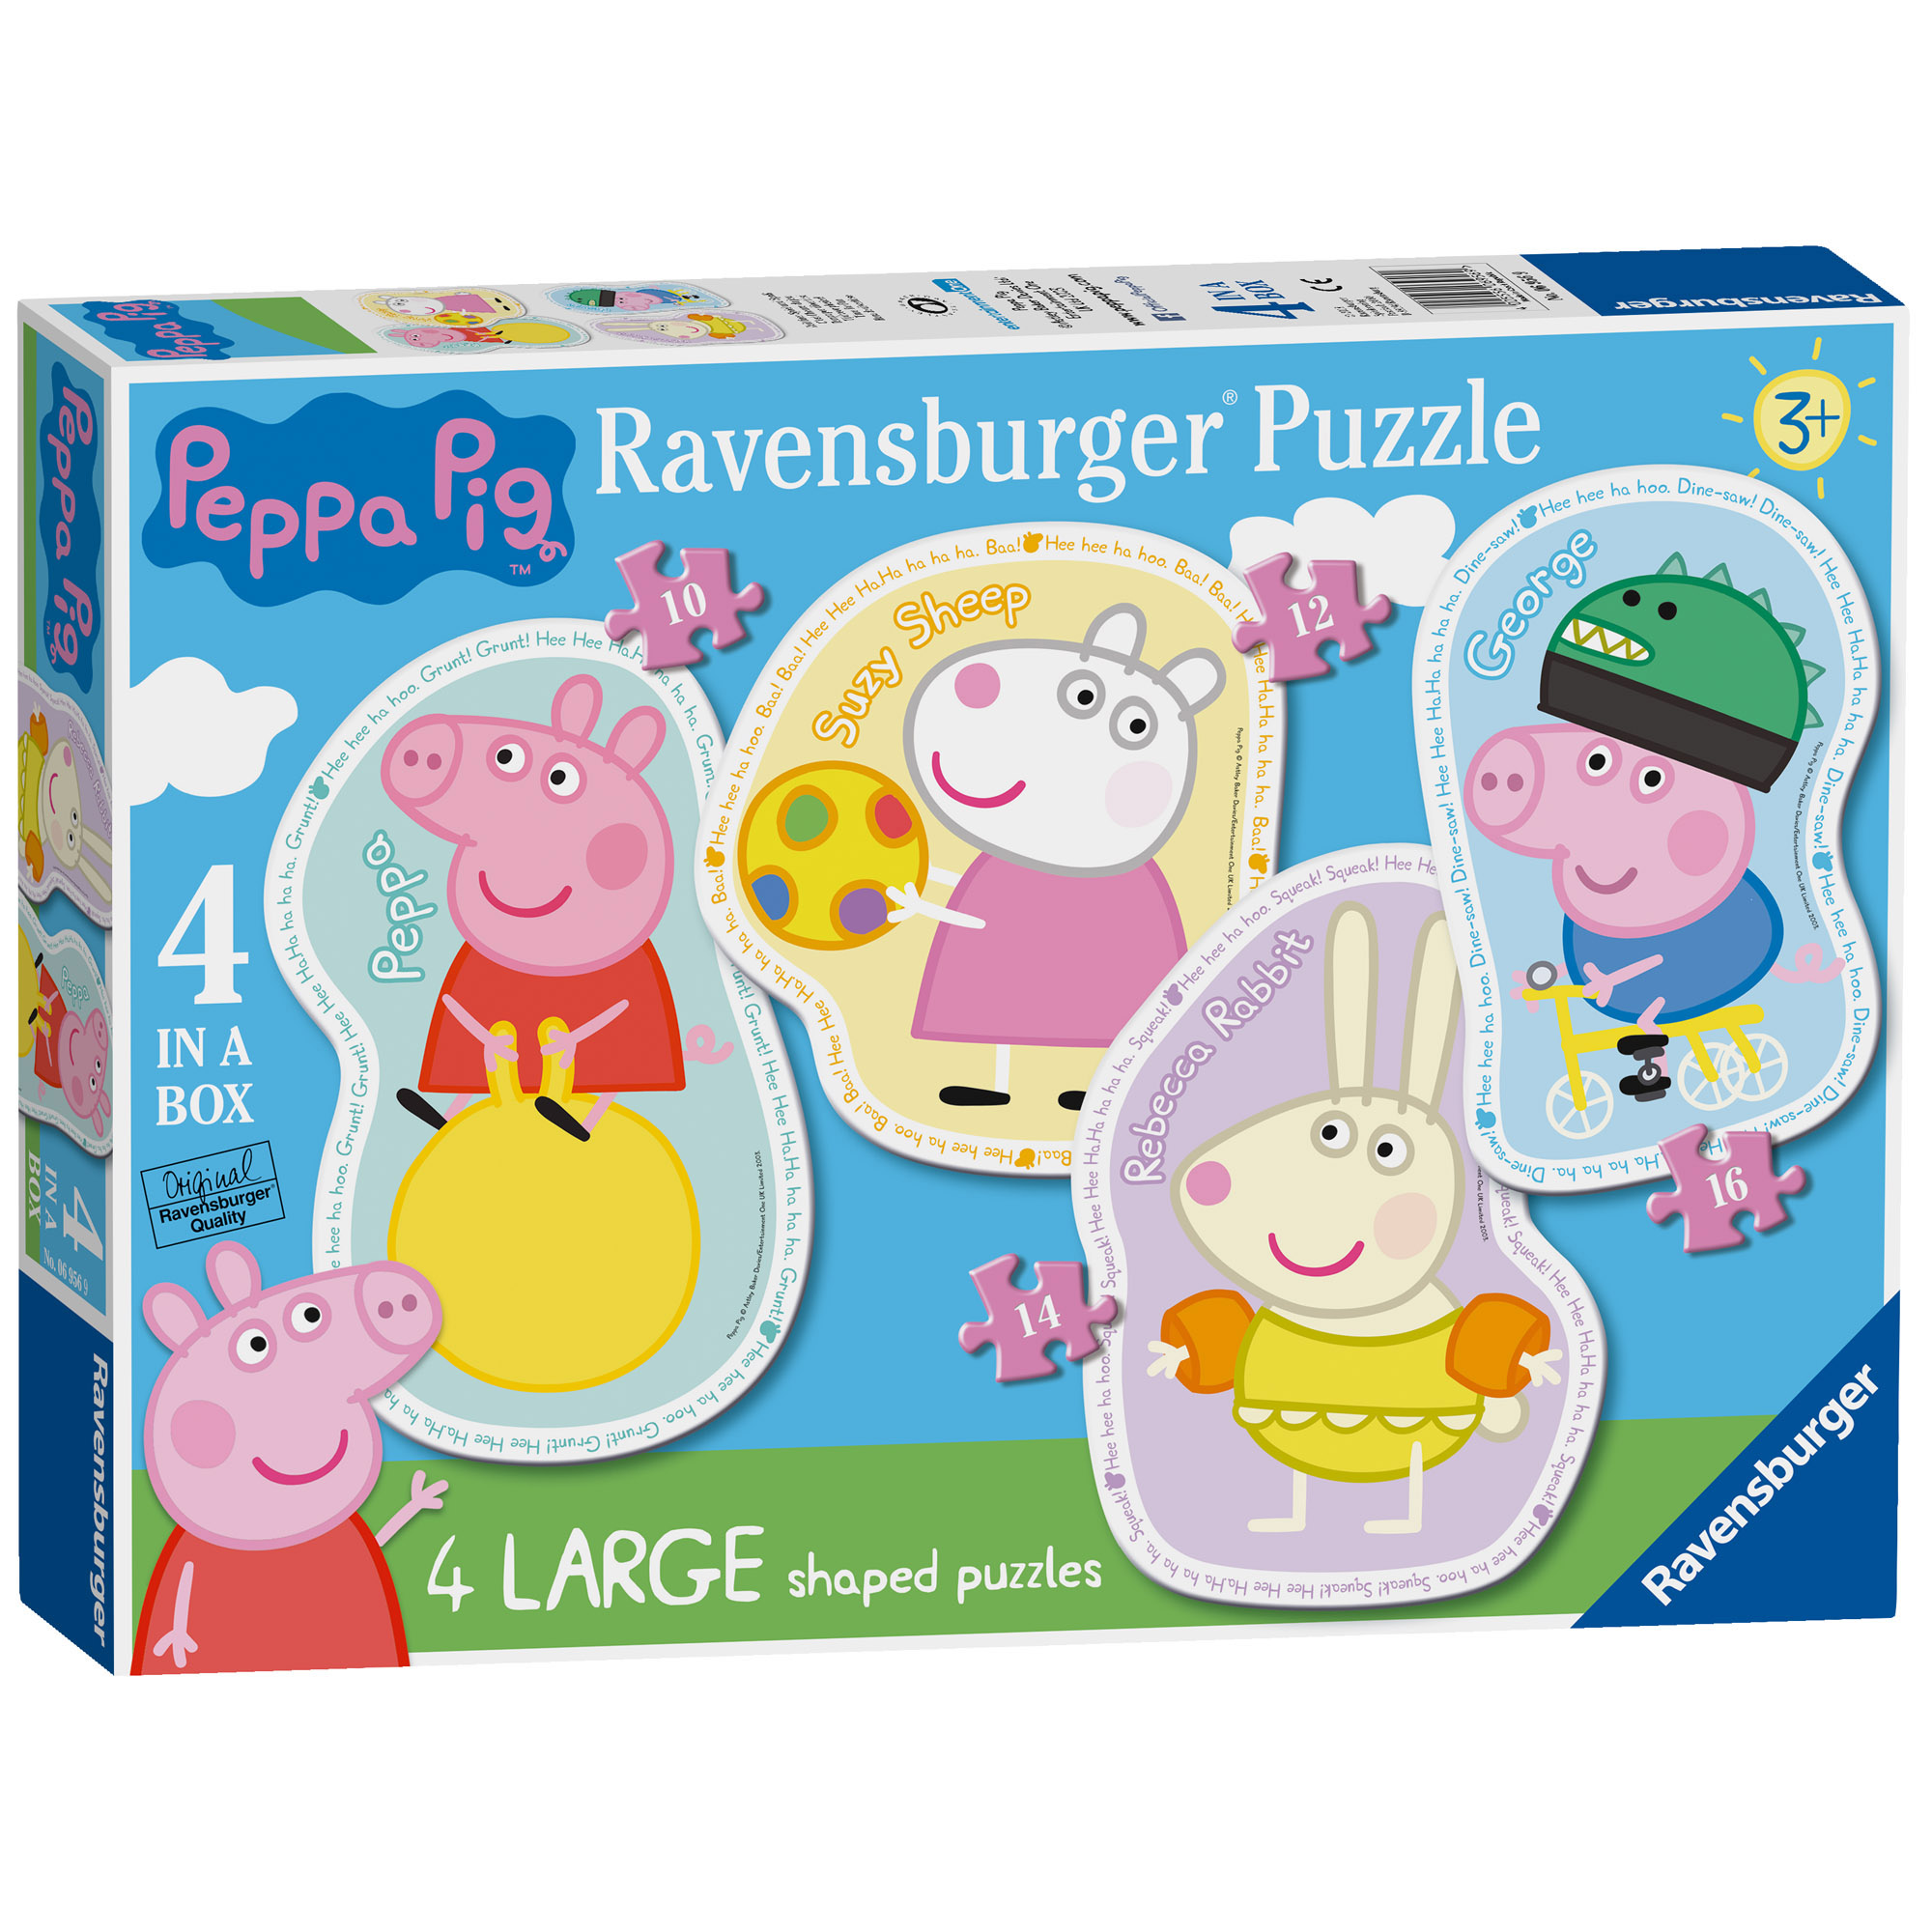 Ravensburger - puzzle peppa pig, collezione shaped 4 in a box, 4 puzzle da 10-12-14-16 pezzi, età raccomandata 3+ anni - RAVENSBURGER